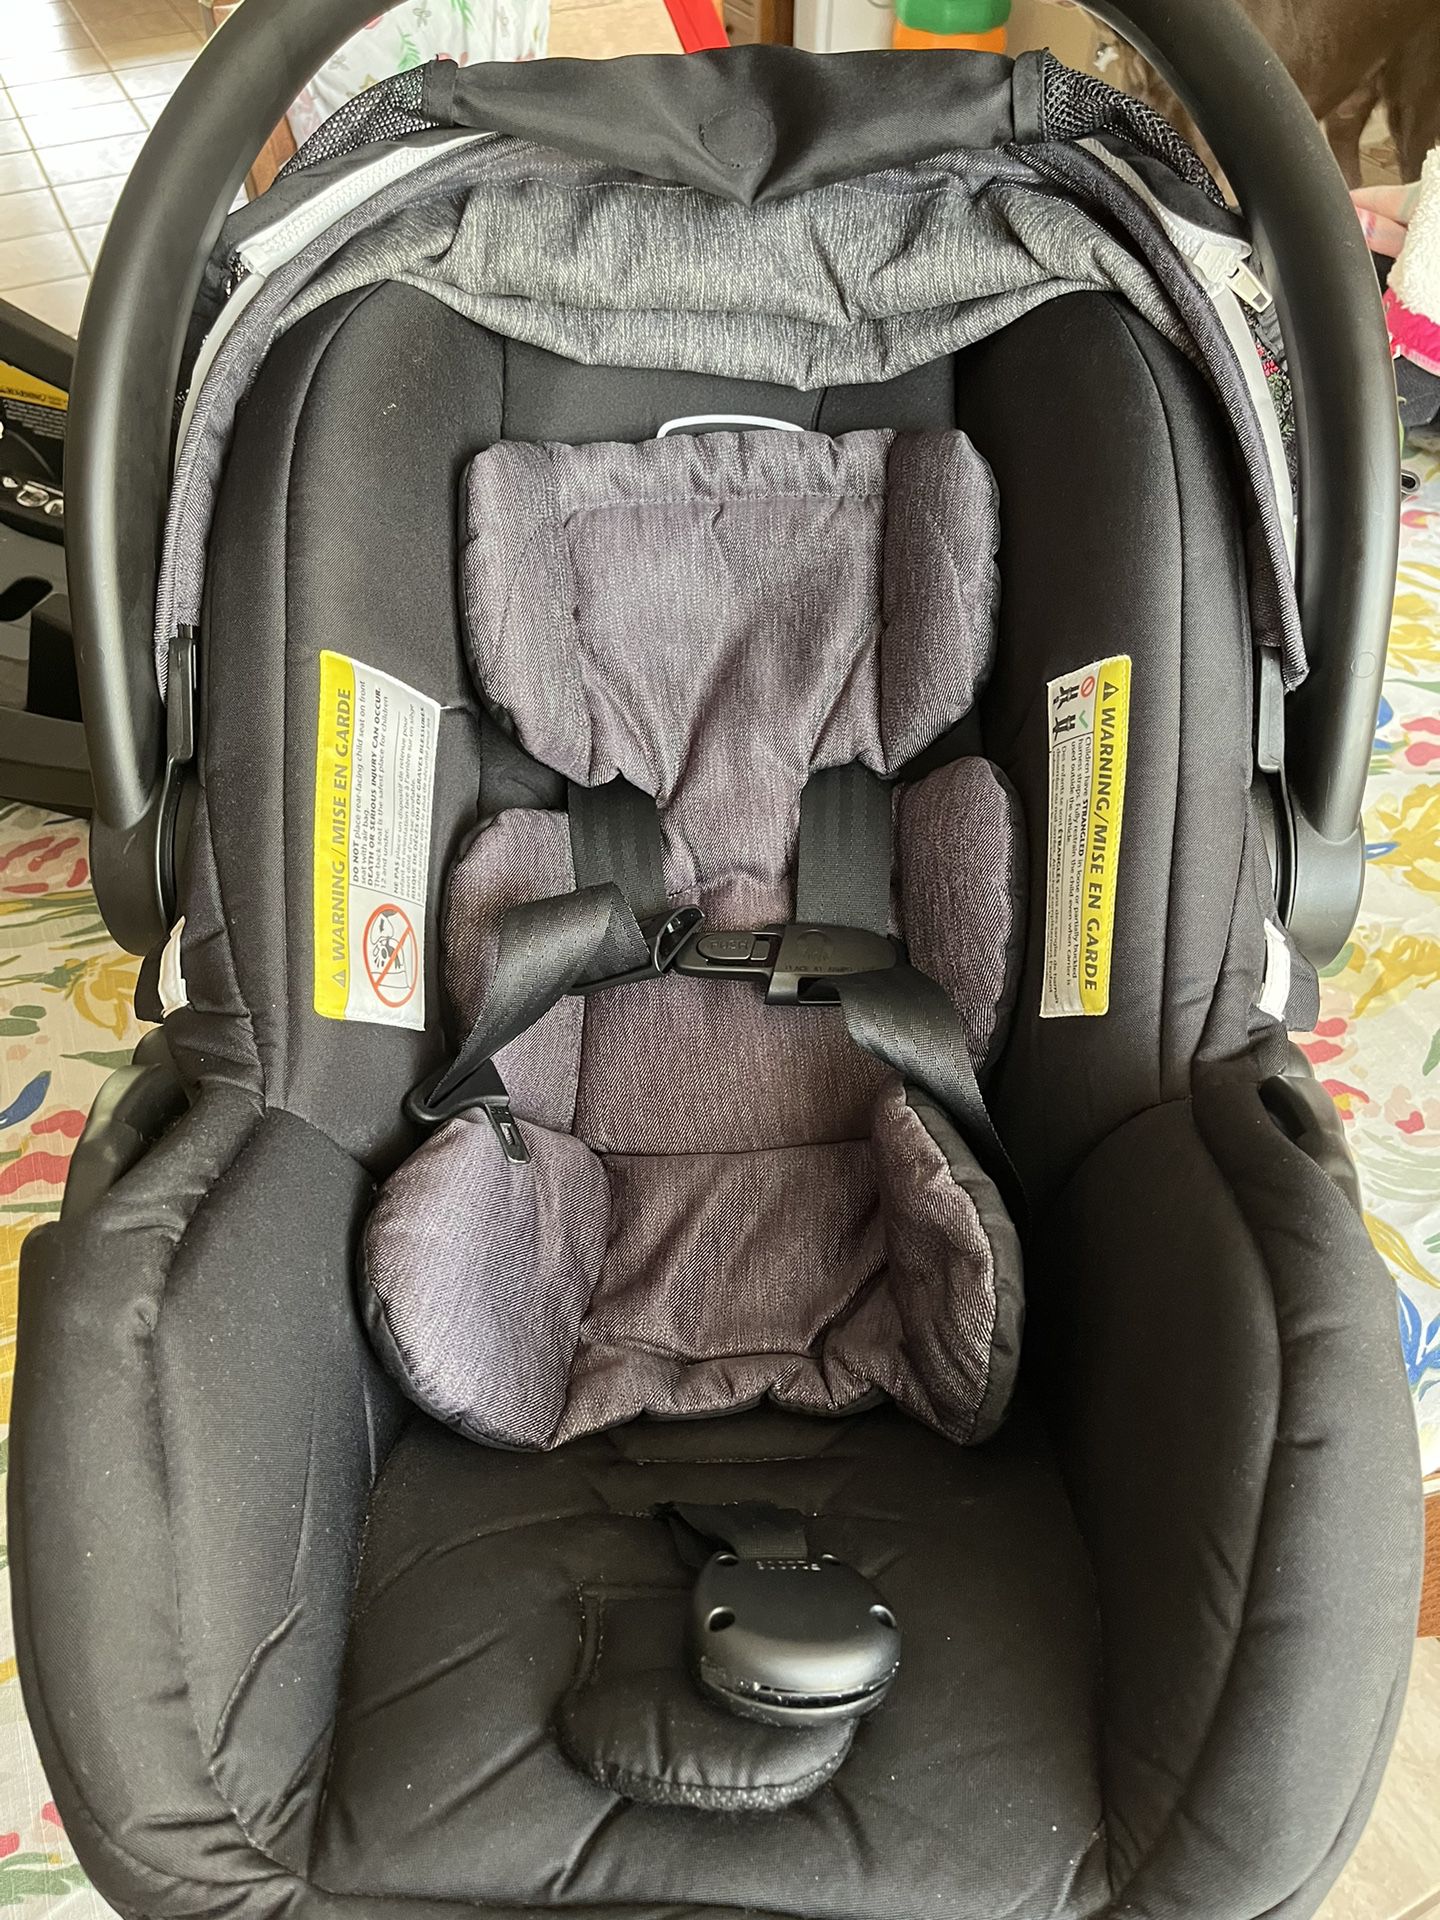 LiteMax Vizor Infant Car Seat (Sable Black